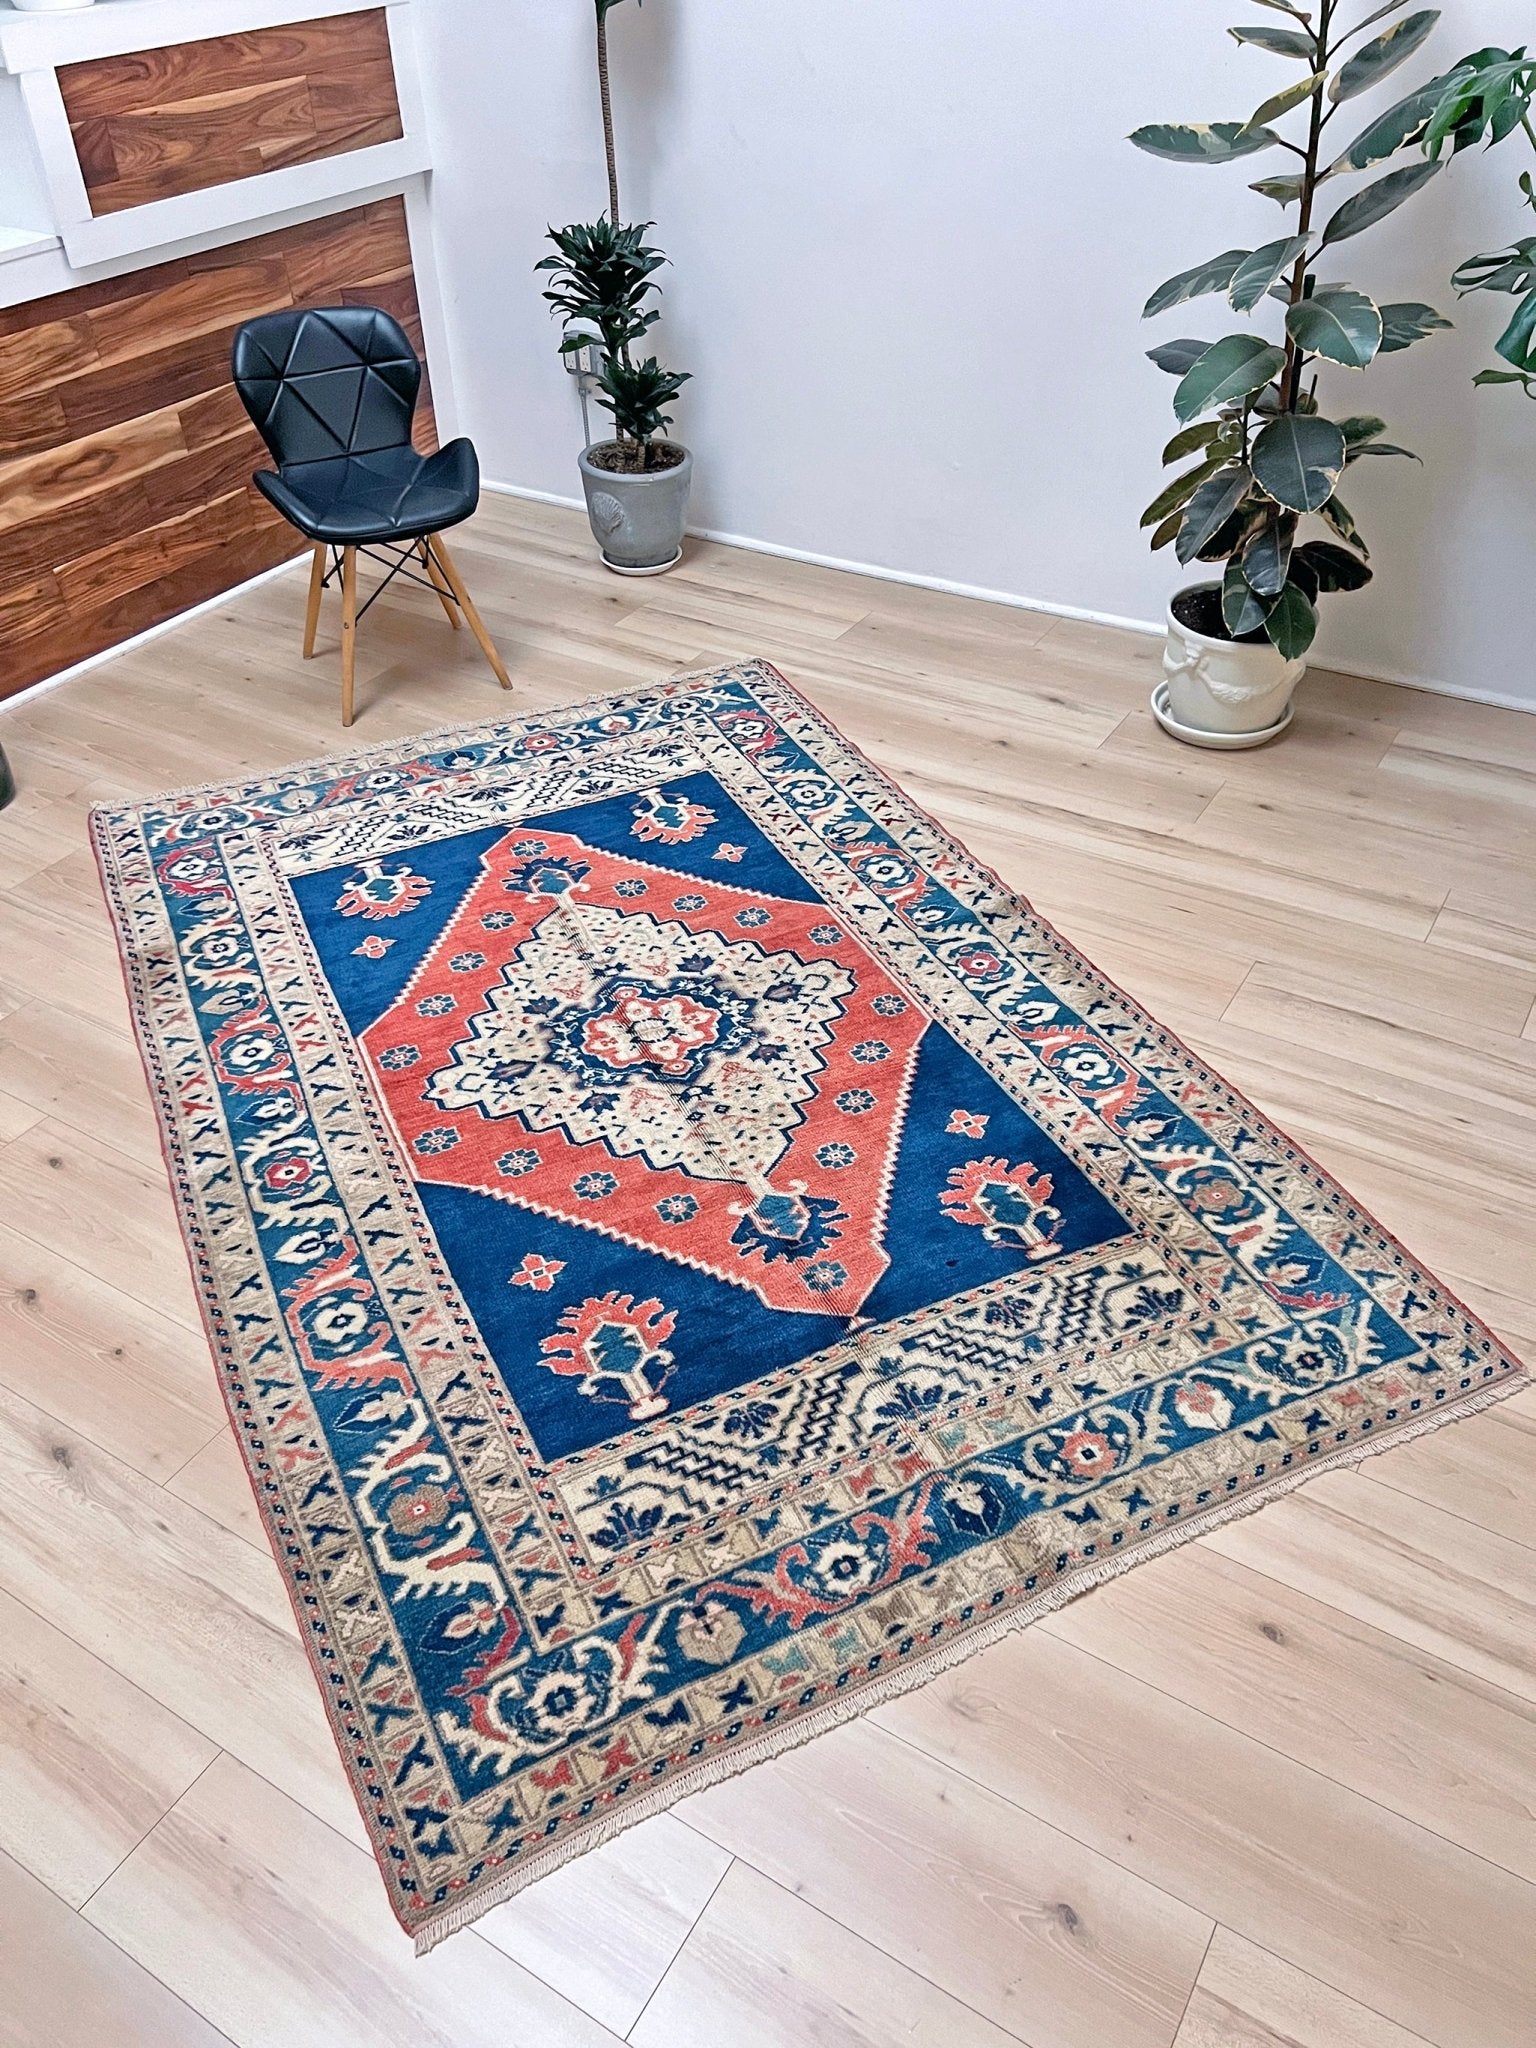 Taspinar muted turkish rug shop san francisco bay area. Oriental rug shop palo alto. Buy handmade wool rug online.